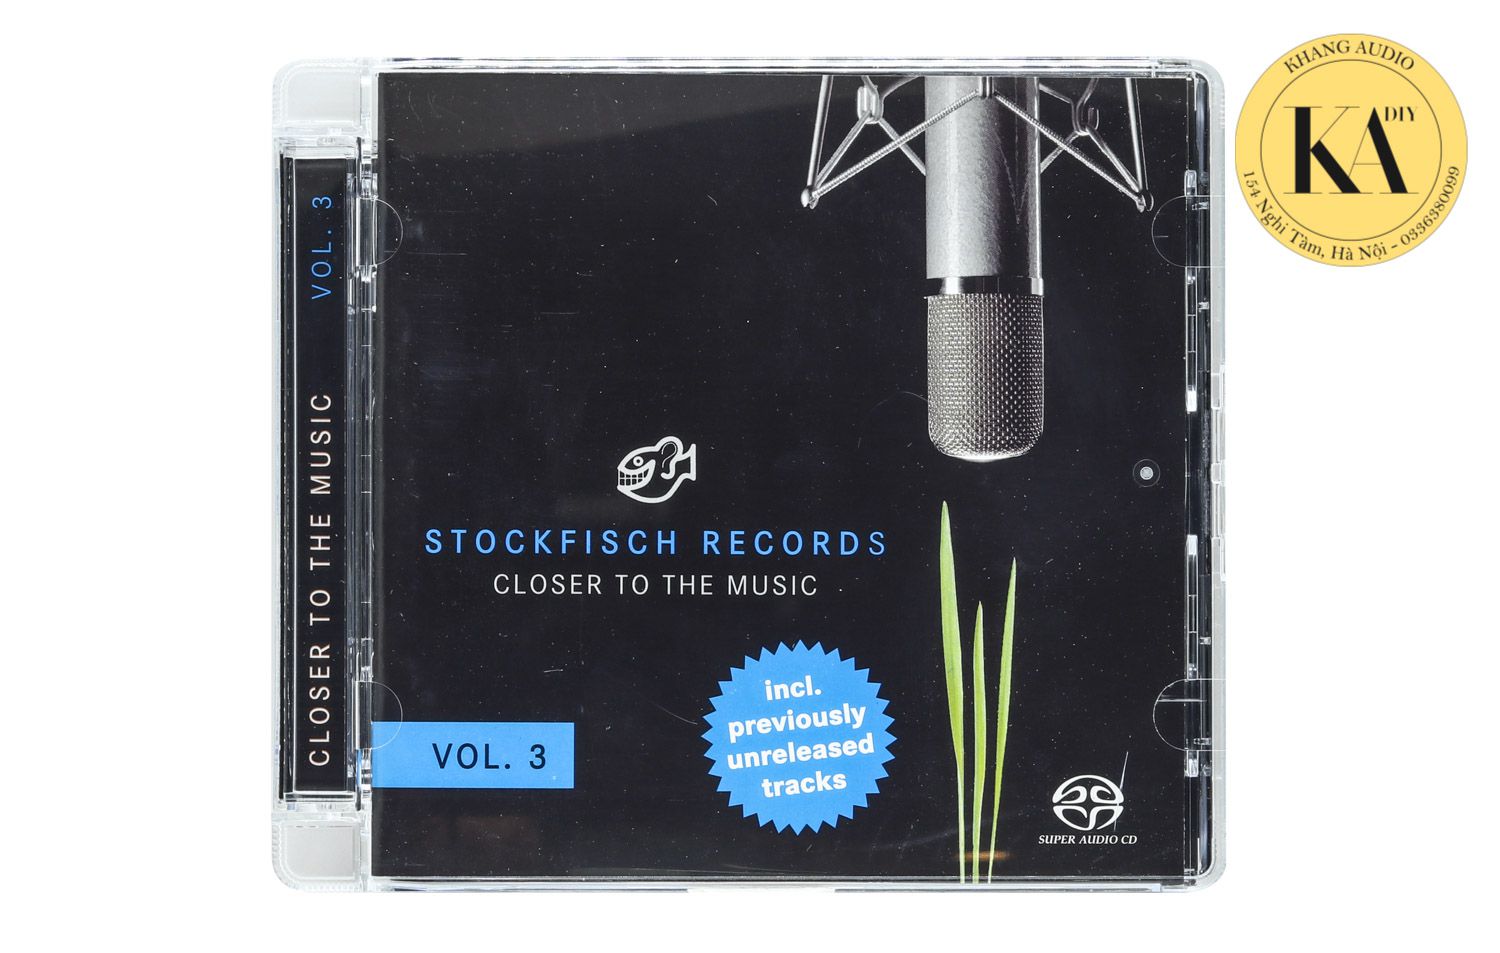 SACD Stockfisch Records Vol.3 Khang Audio 0336380099